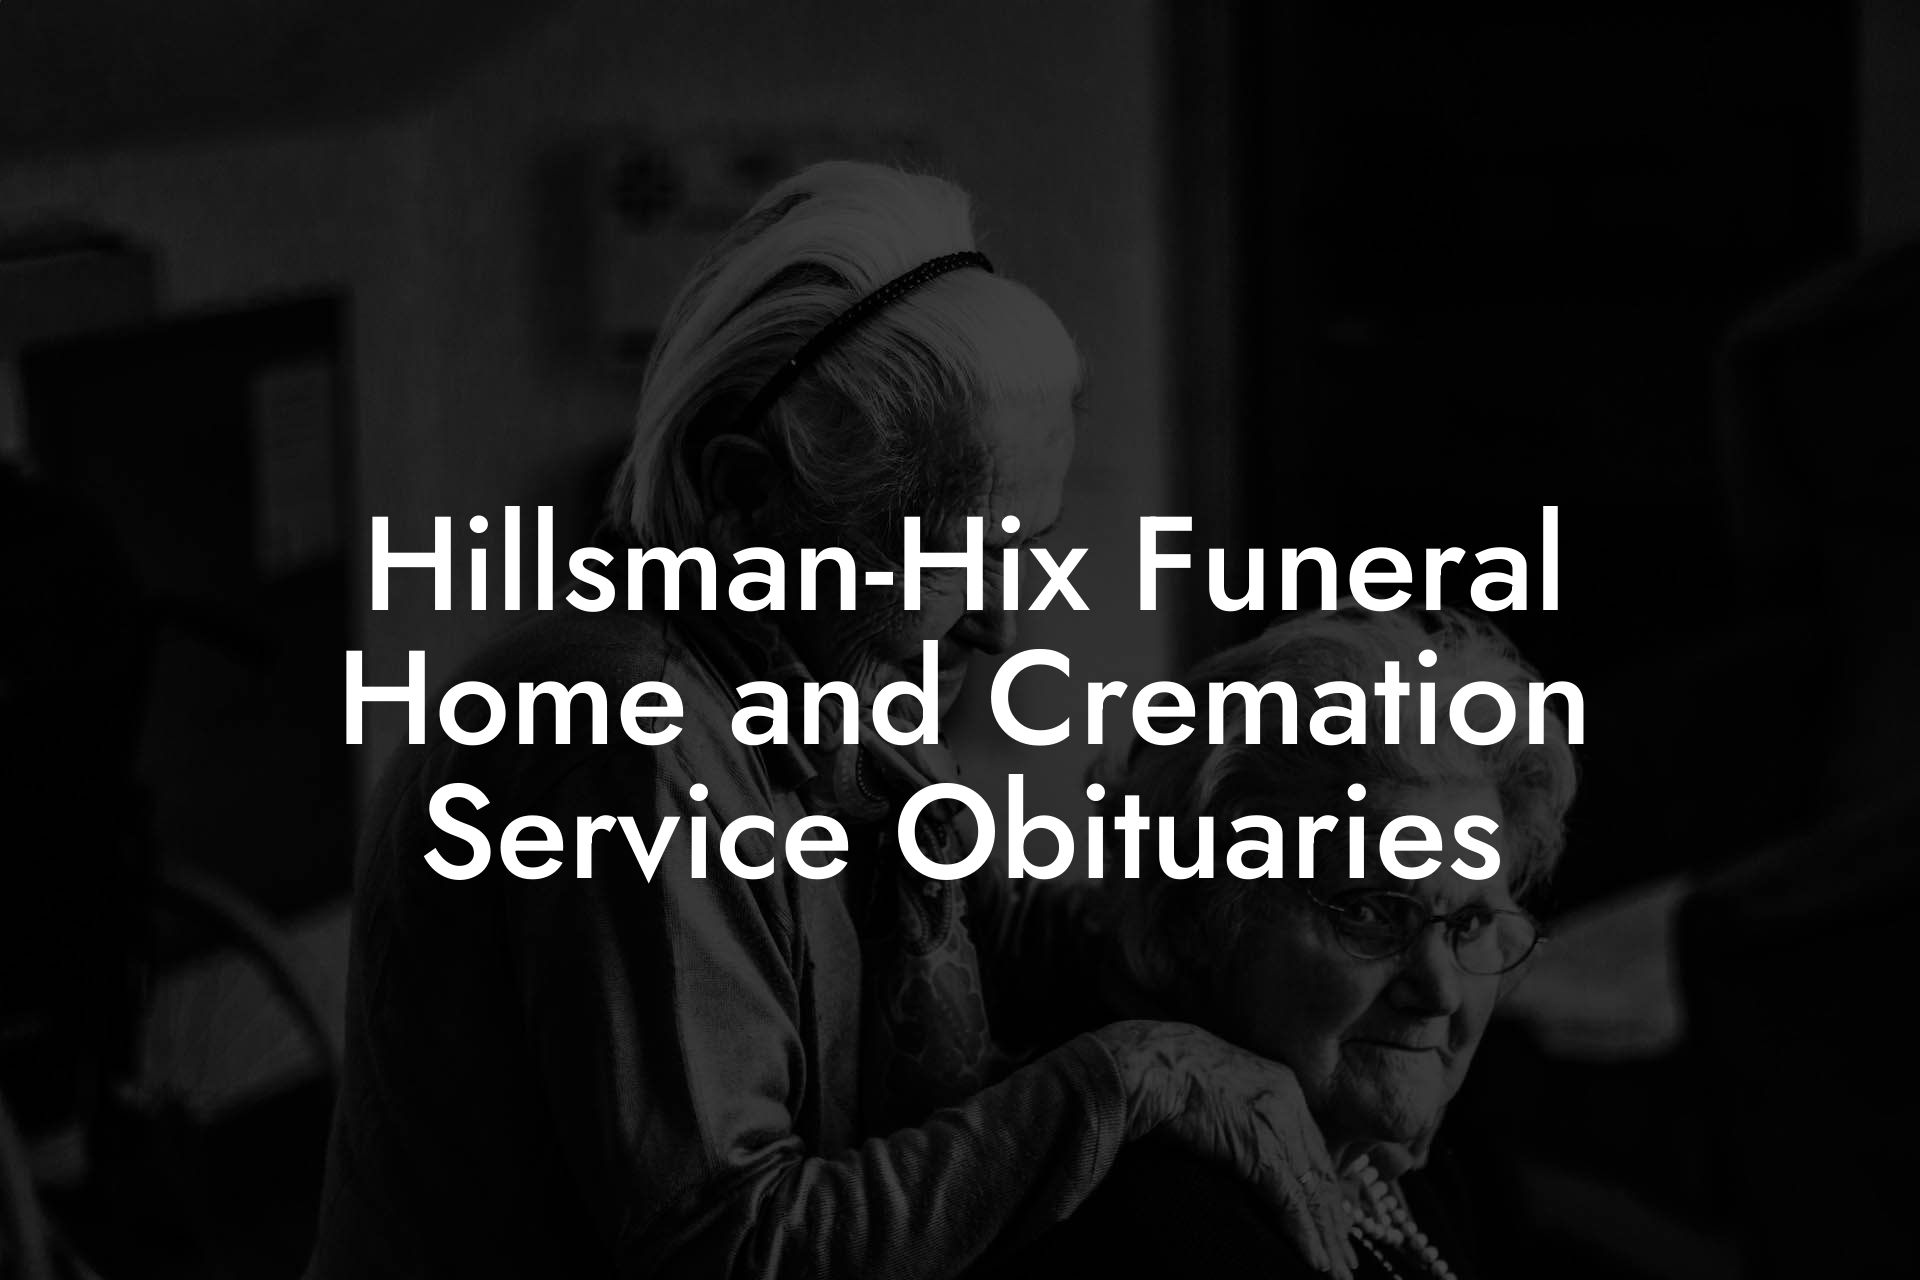 Hillsman-Hix Funeral Home and Cremation Service Obituaries